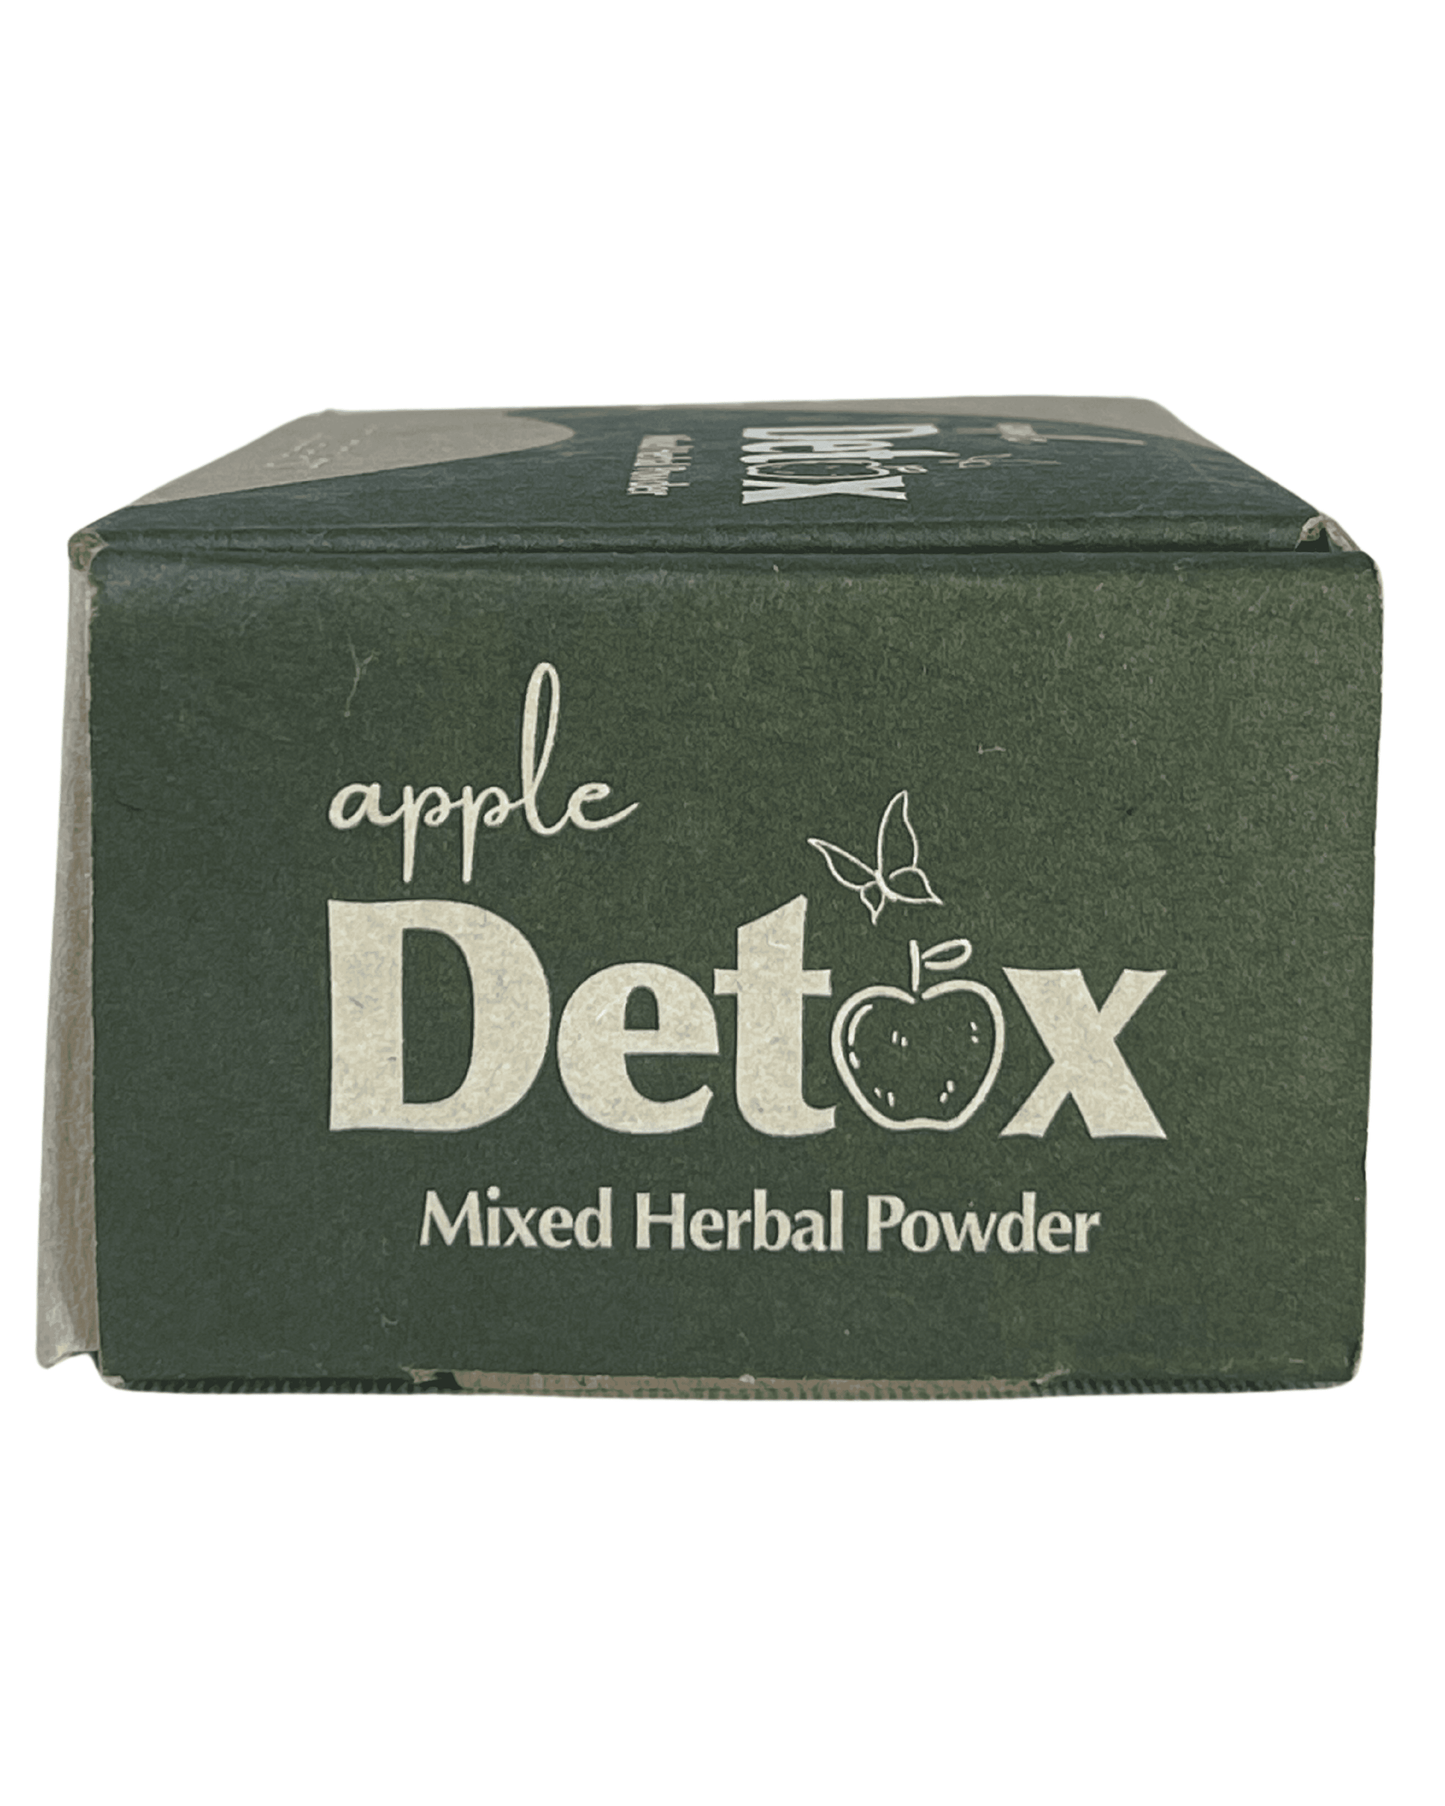 Mixed Herbal Powder